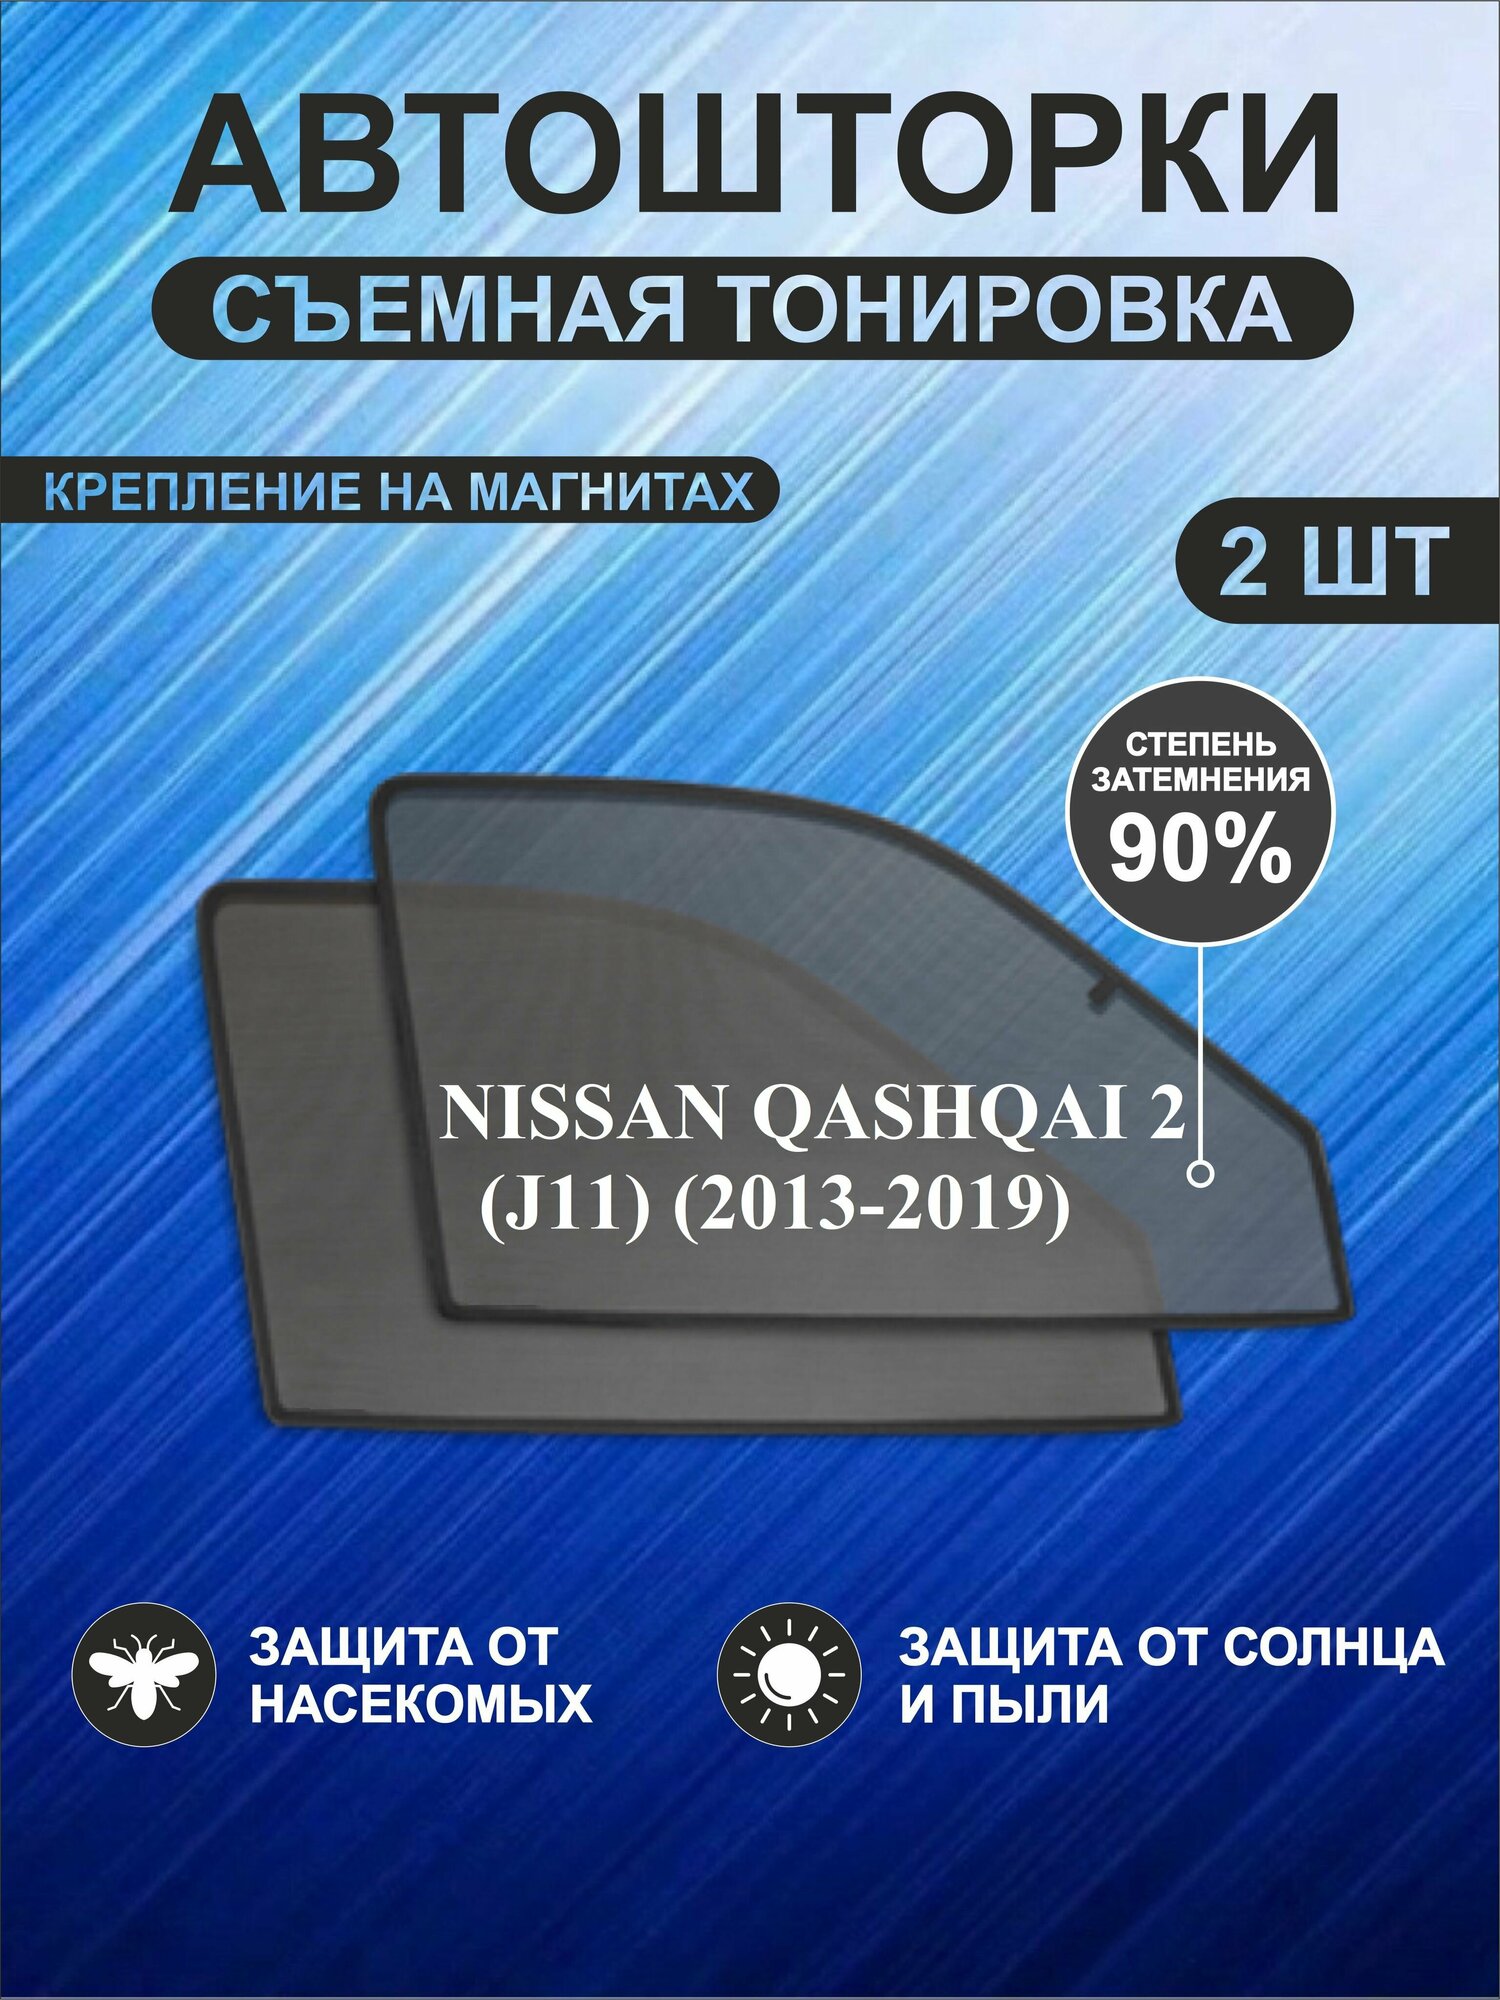 Автошторки на Nissan Qashqai 2 (J11)(2013-2019)